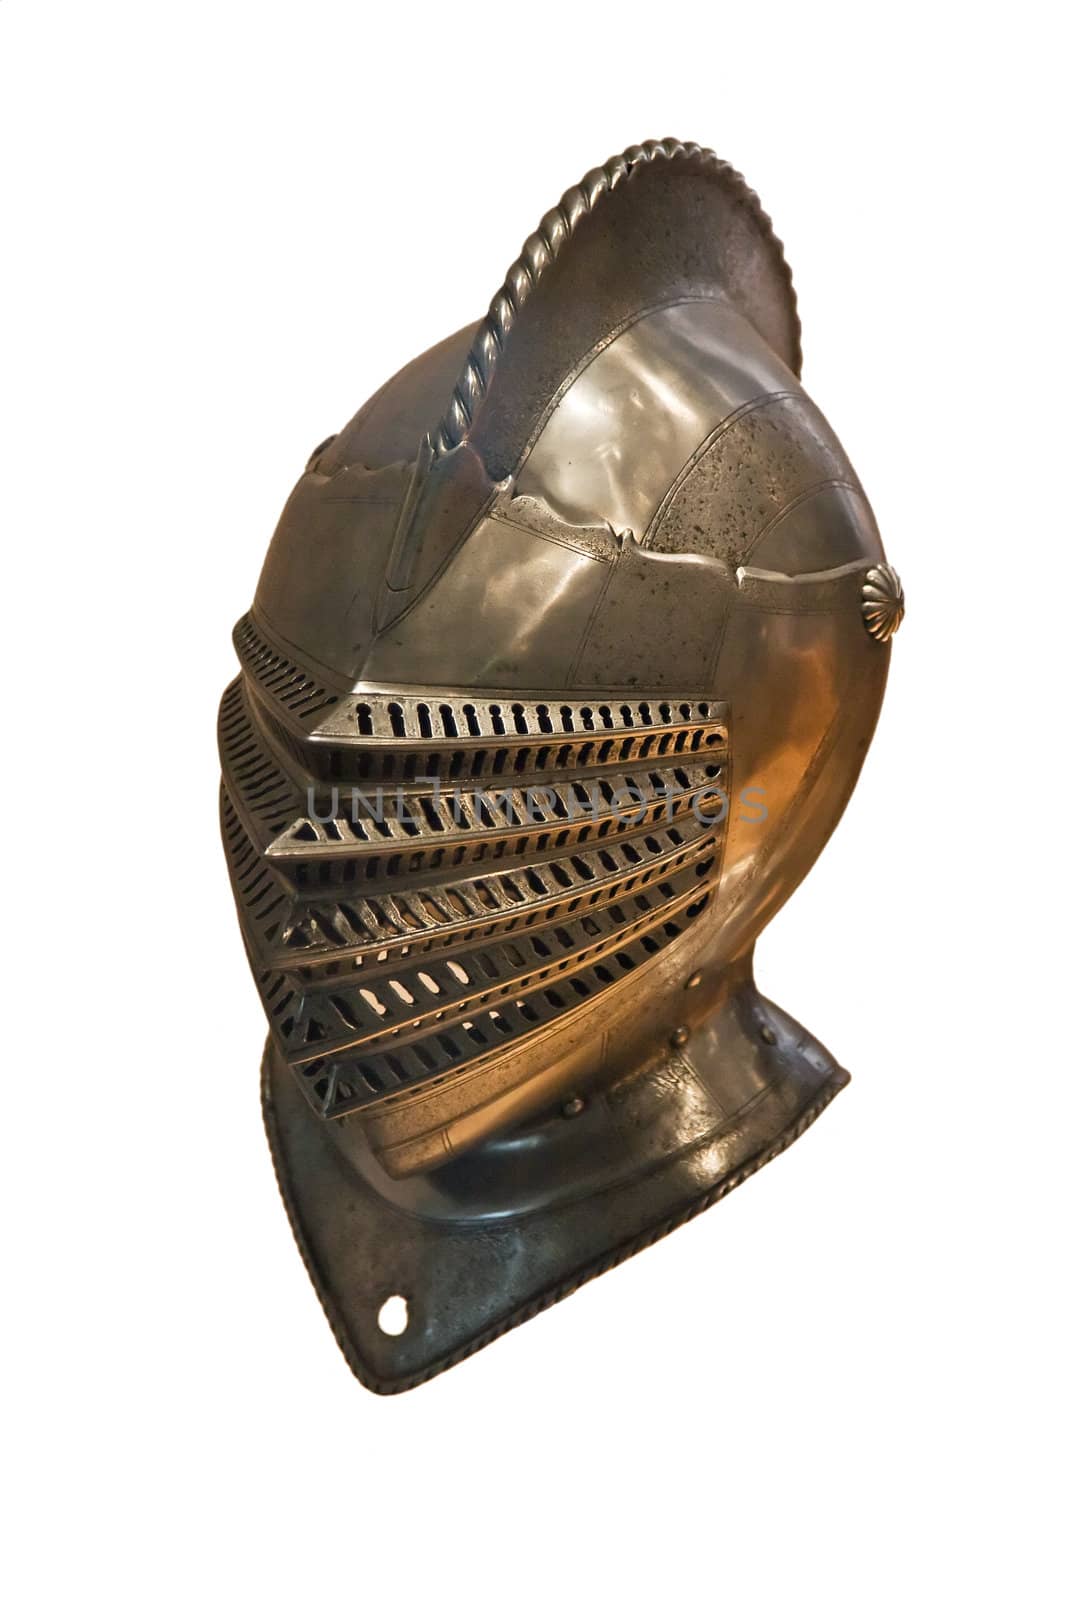 Knight's armor by swisshippo